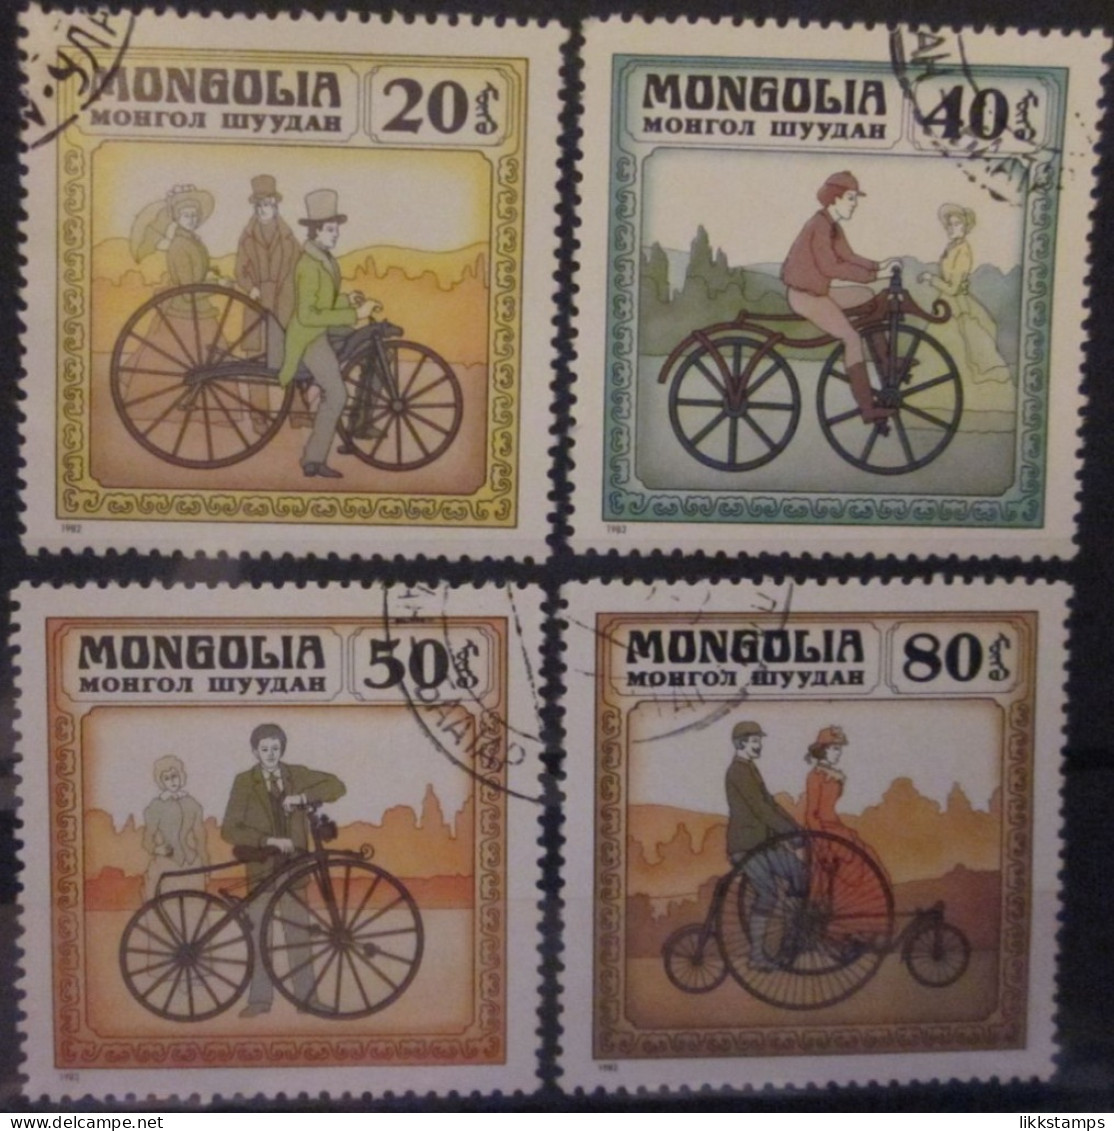 MONGOLIA ~ 1982 ~ S.G. NUMBERS 1432 - 1433 + 1435, ~ BICYCLES. ~ VFU #03480 - Mongolia